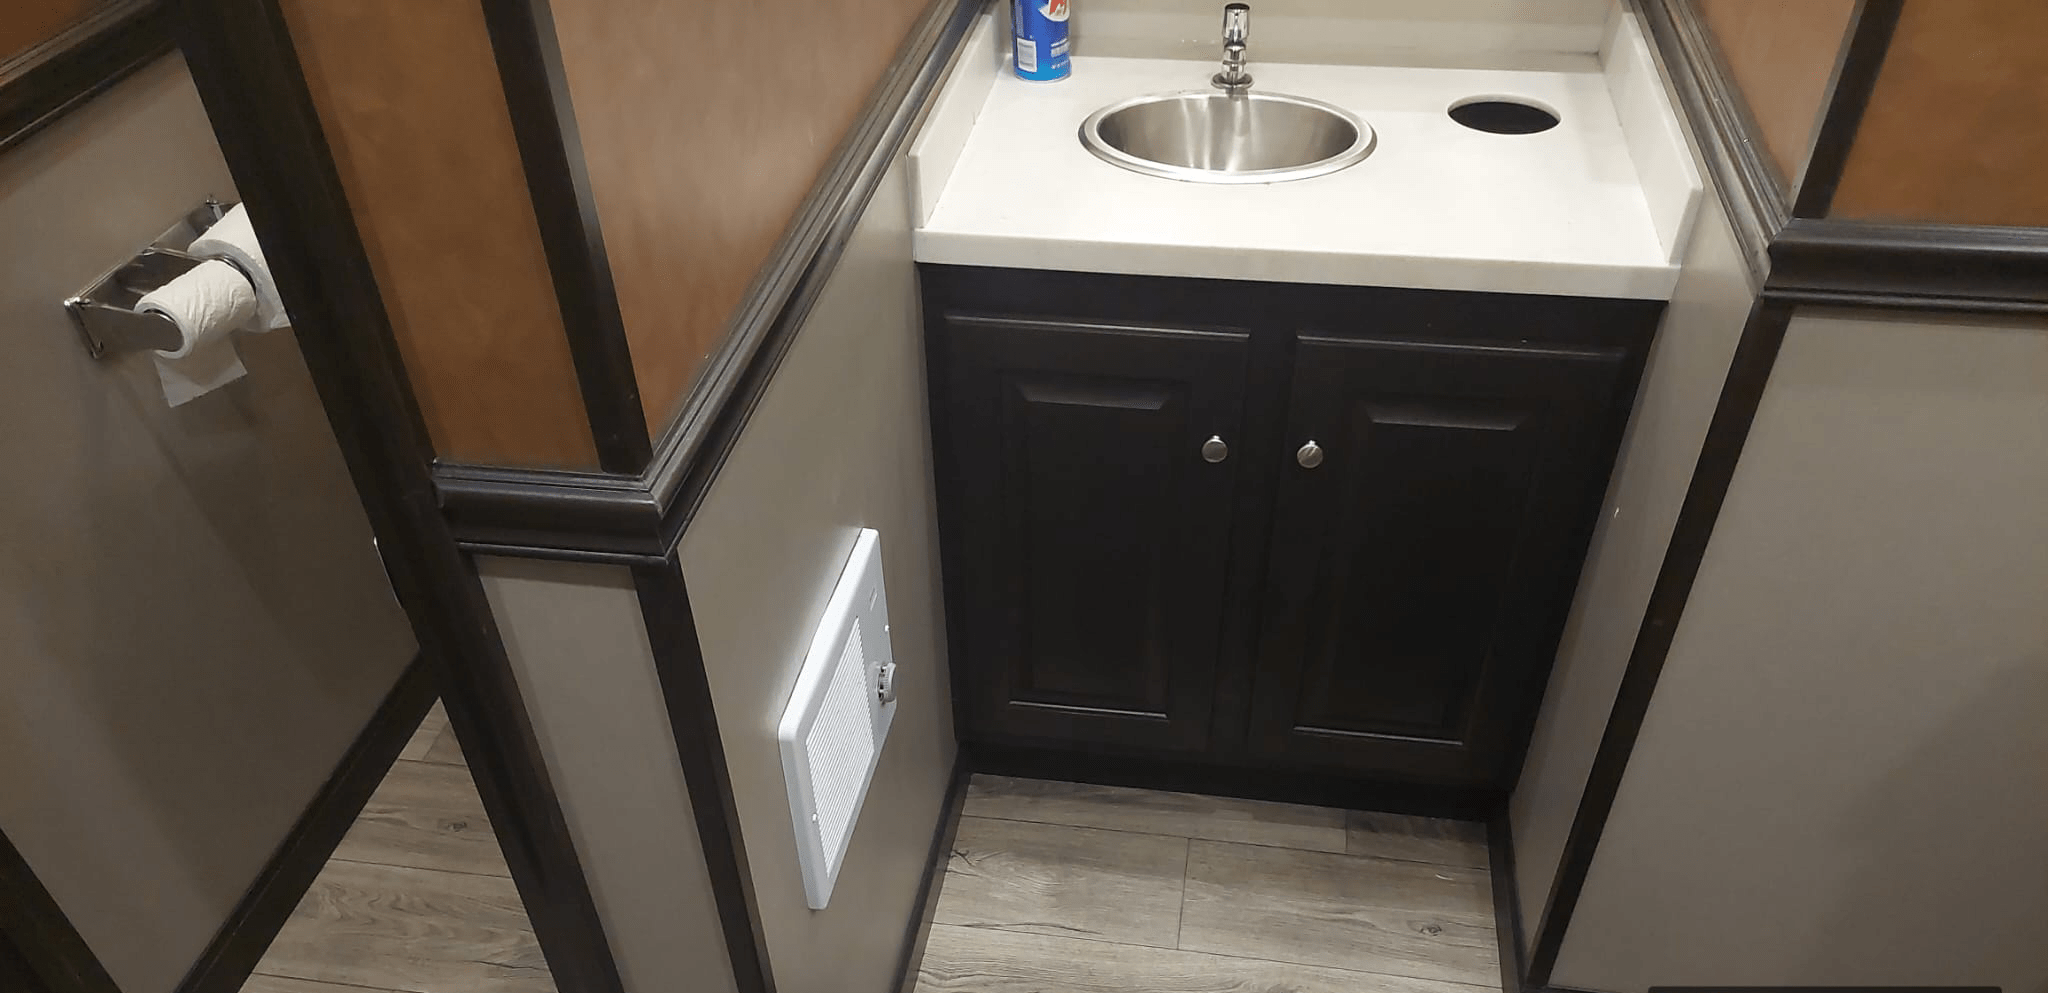 modern interior of event restroom trailers